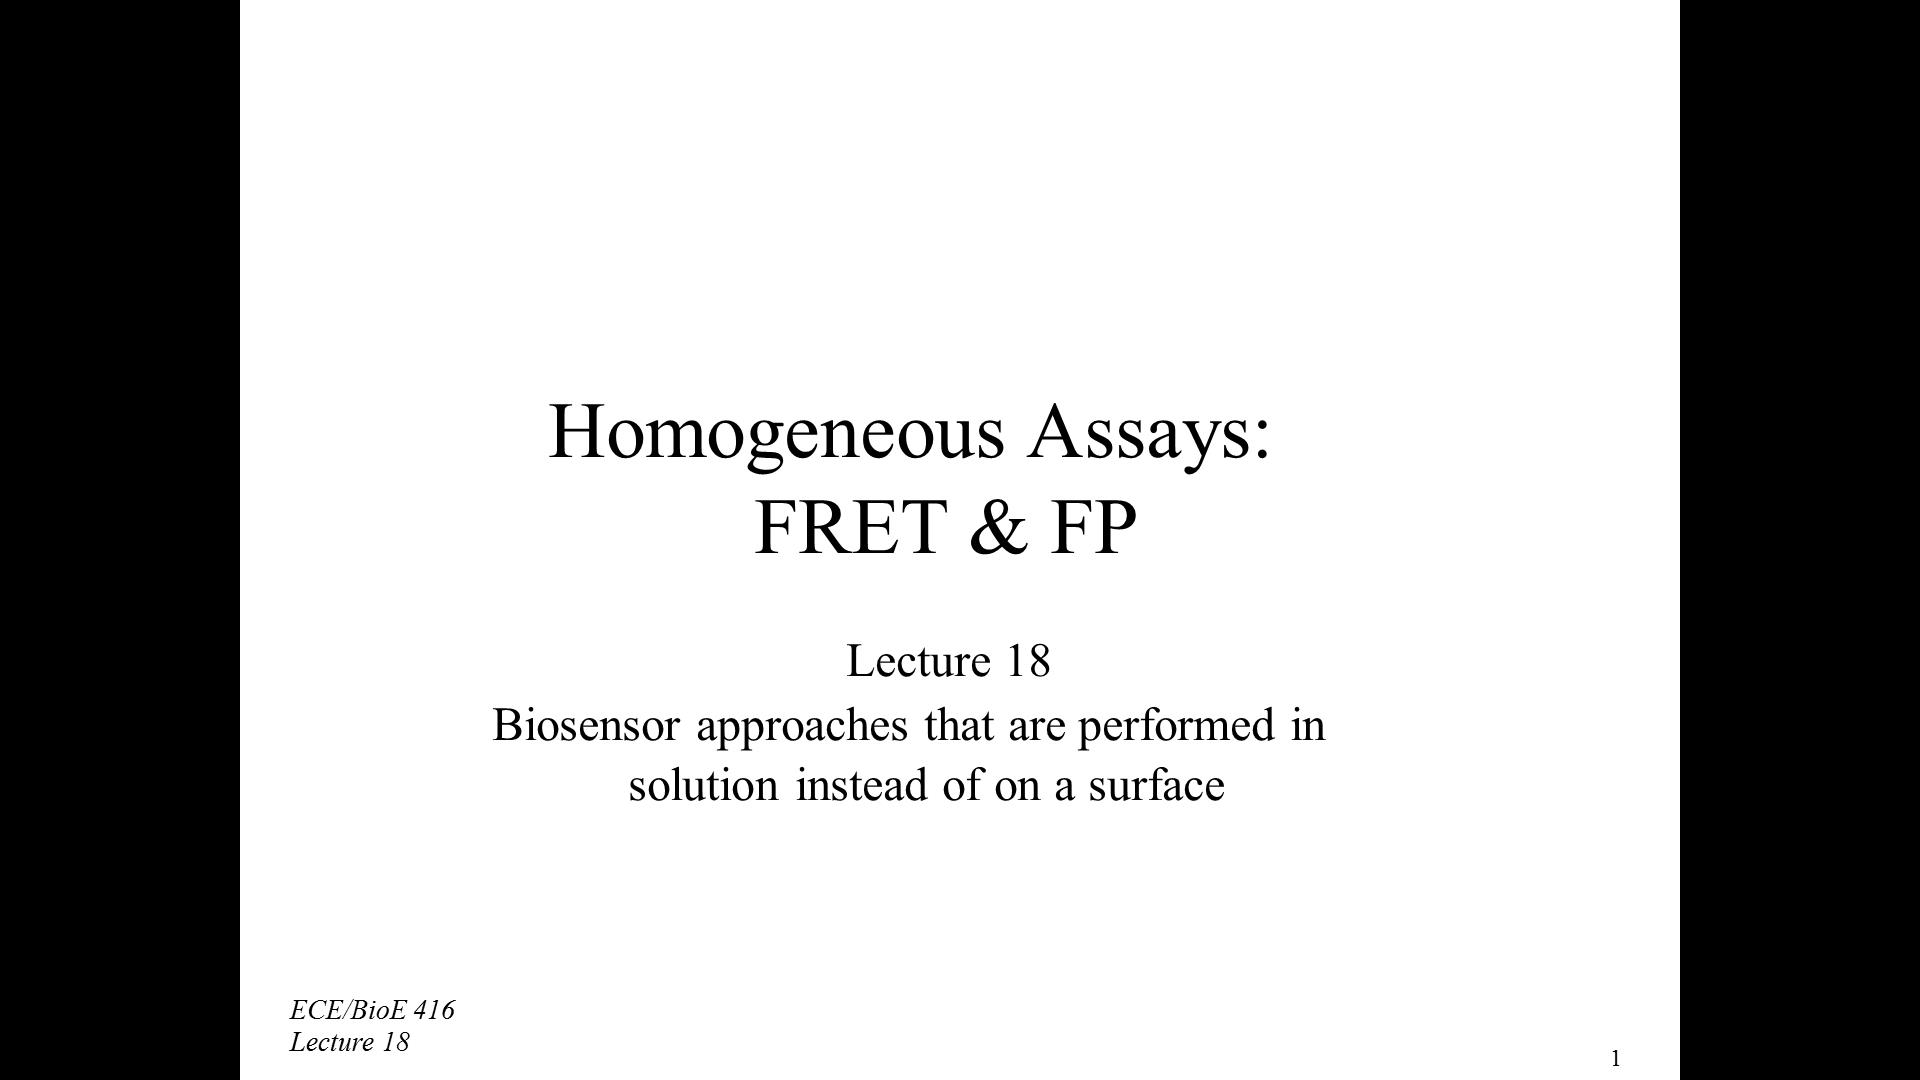  Resources: [Illinois] ECE 416 Fluorescence III and  Homogeneous Assays I: Watch Presentation